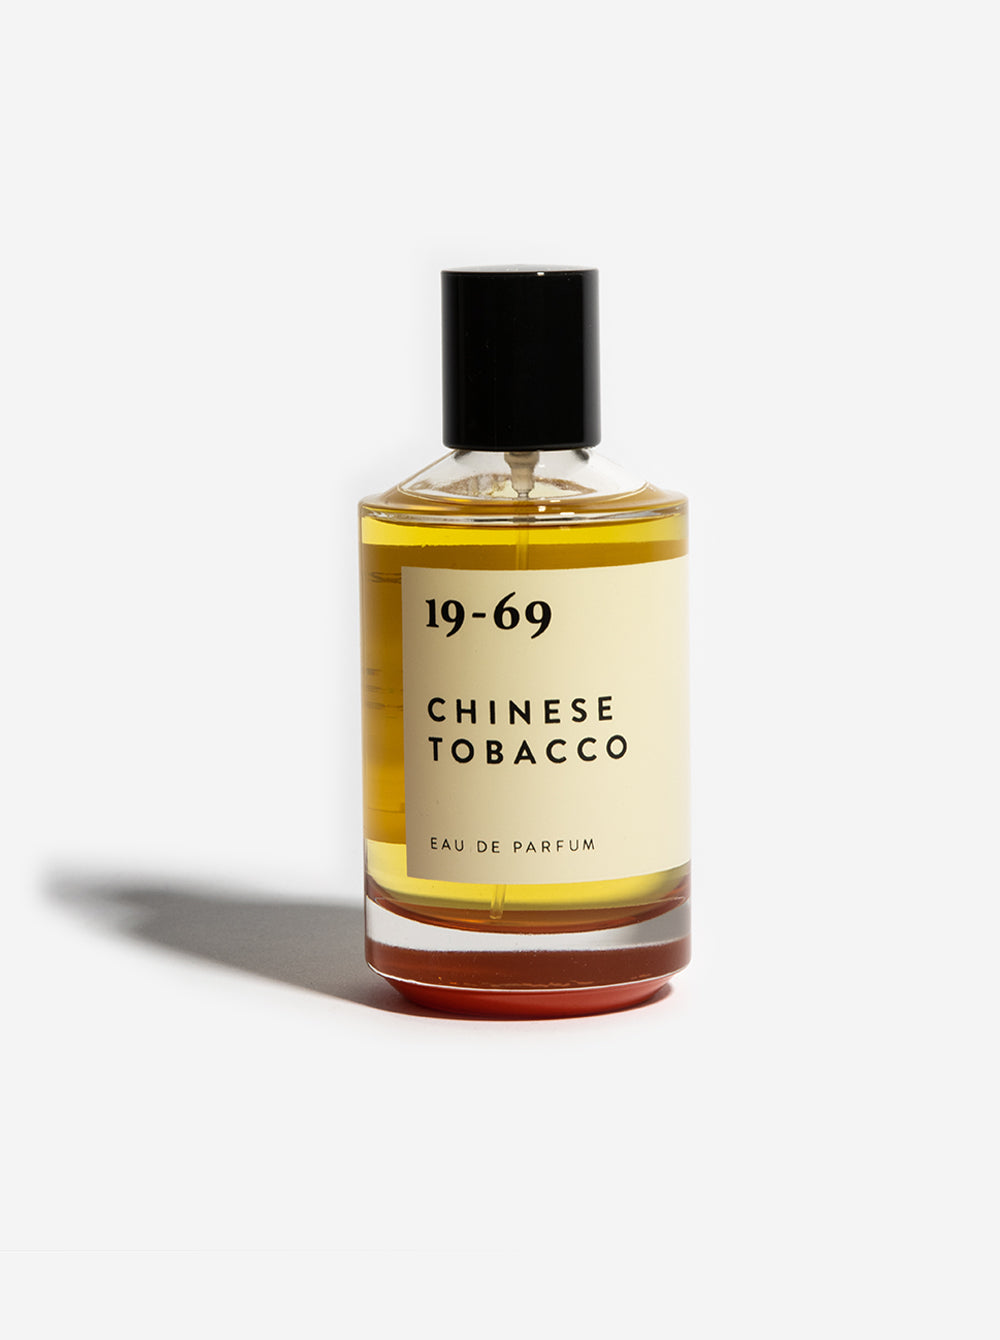 19-69 19-69 Chinese Tobacco Eau de Parfum 100 ml Urbanstaroma